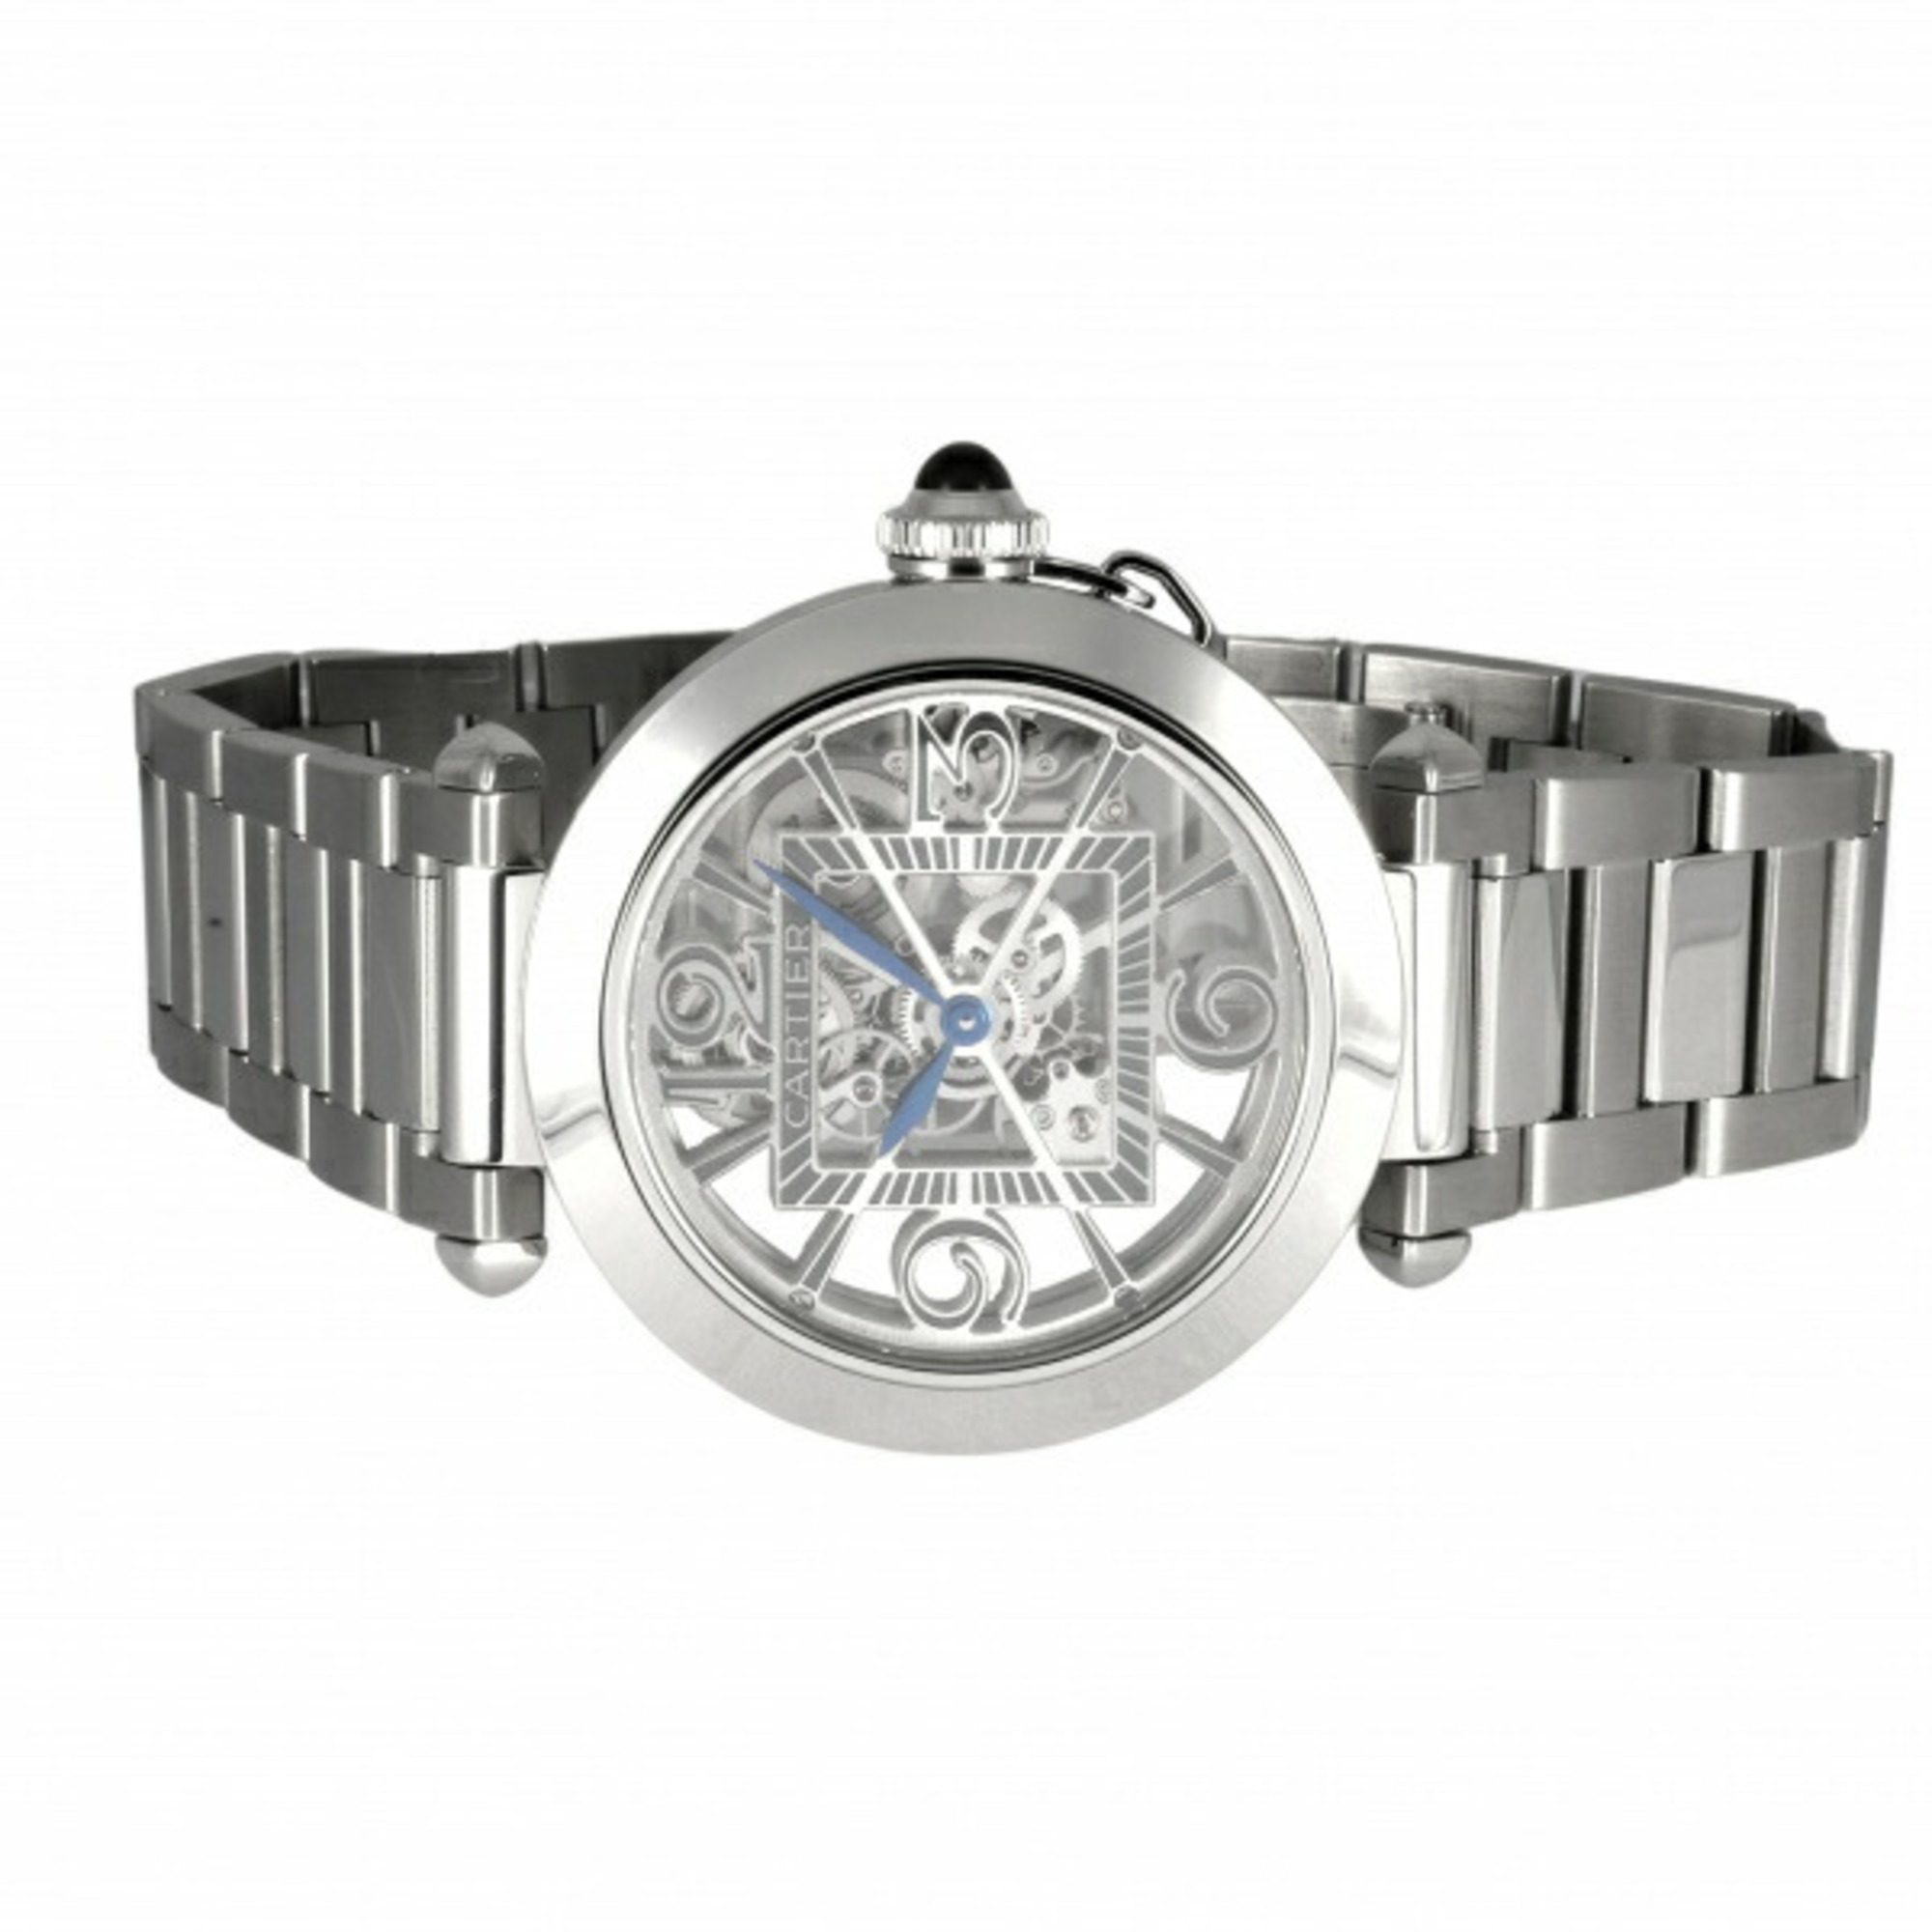 Cartier Pasha WHPA0007 silver/gray dial watch men's